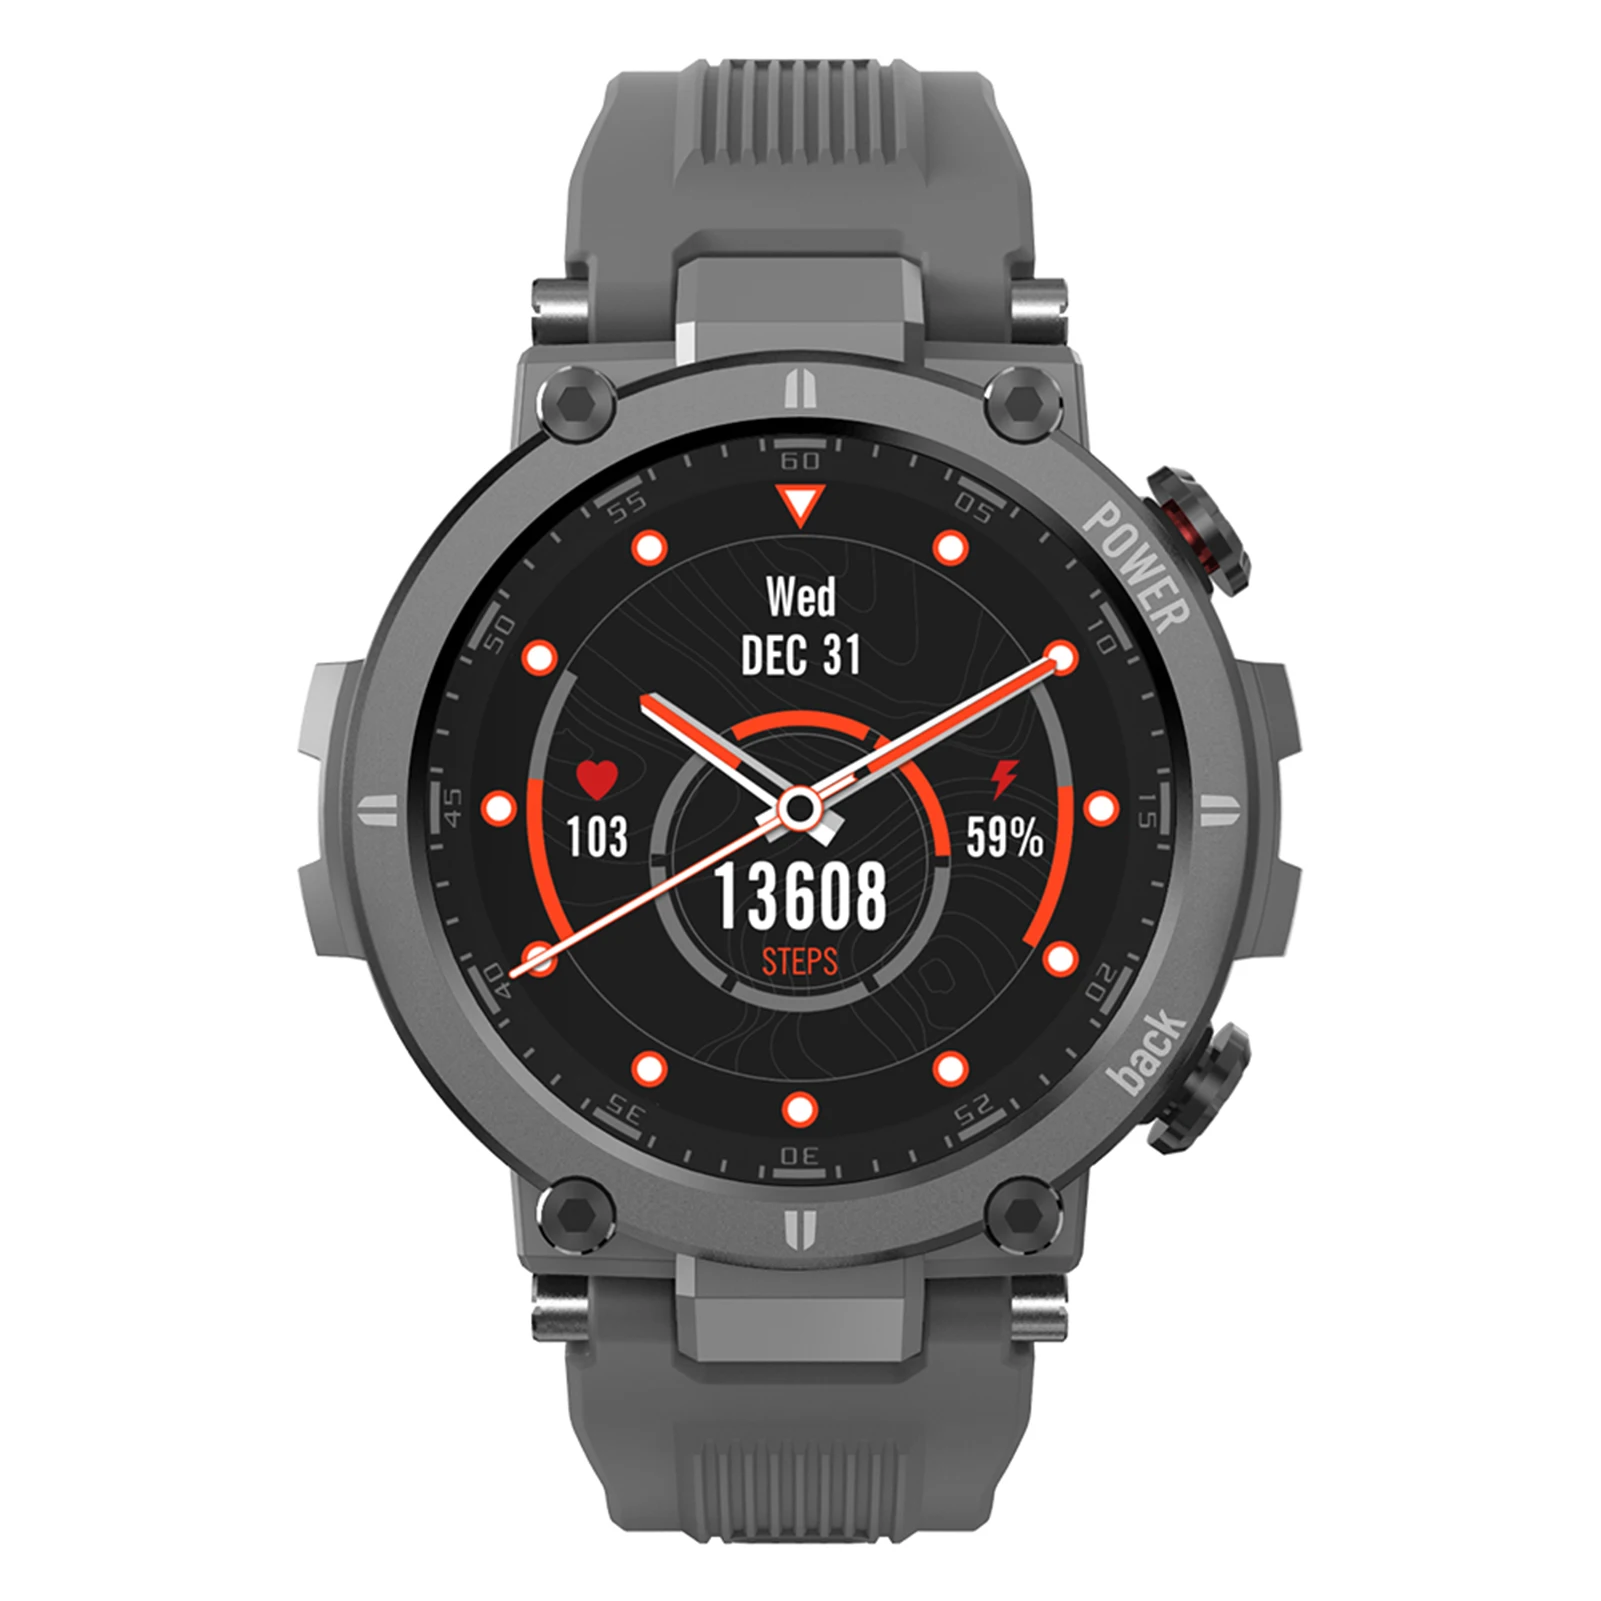 

KOSPET Smart Watch Fitness Tracker Heart Rate Monitor with 20 Sport Modes IP68 Waterproof Sport Watch Touch Screen Smartwatch